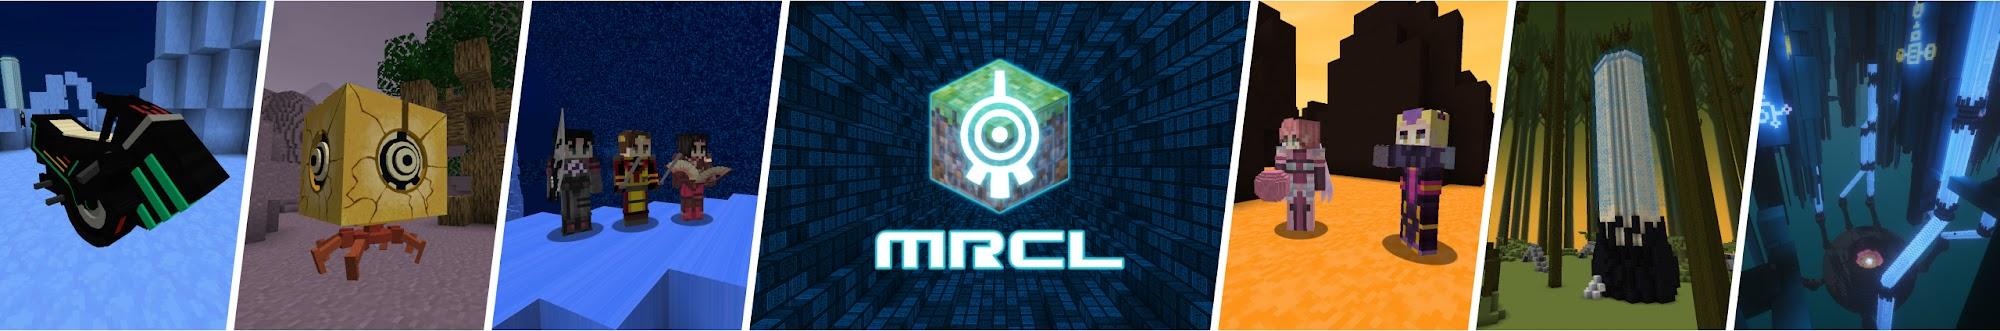 MRCL - Code Lyoko in Minecraft